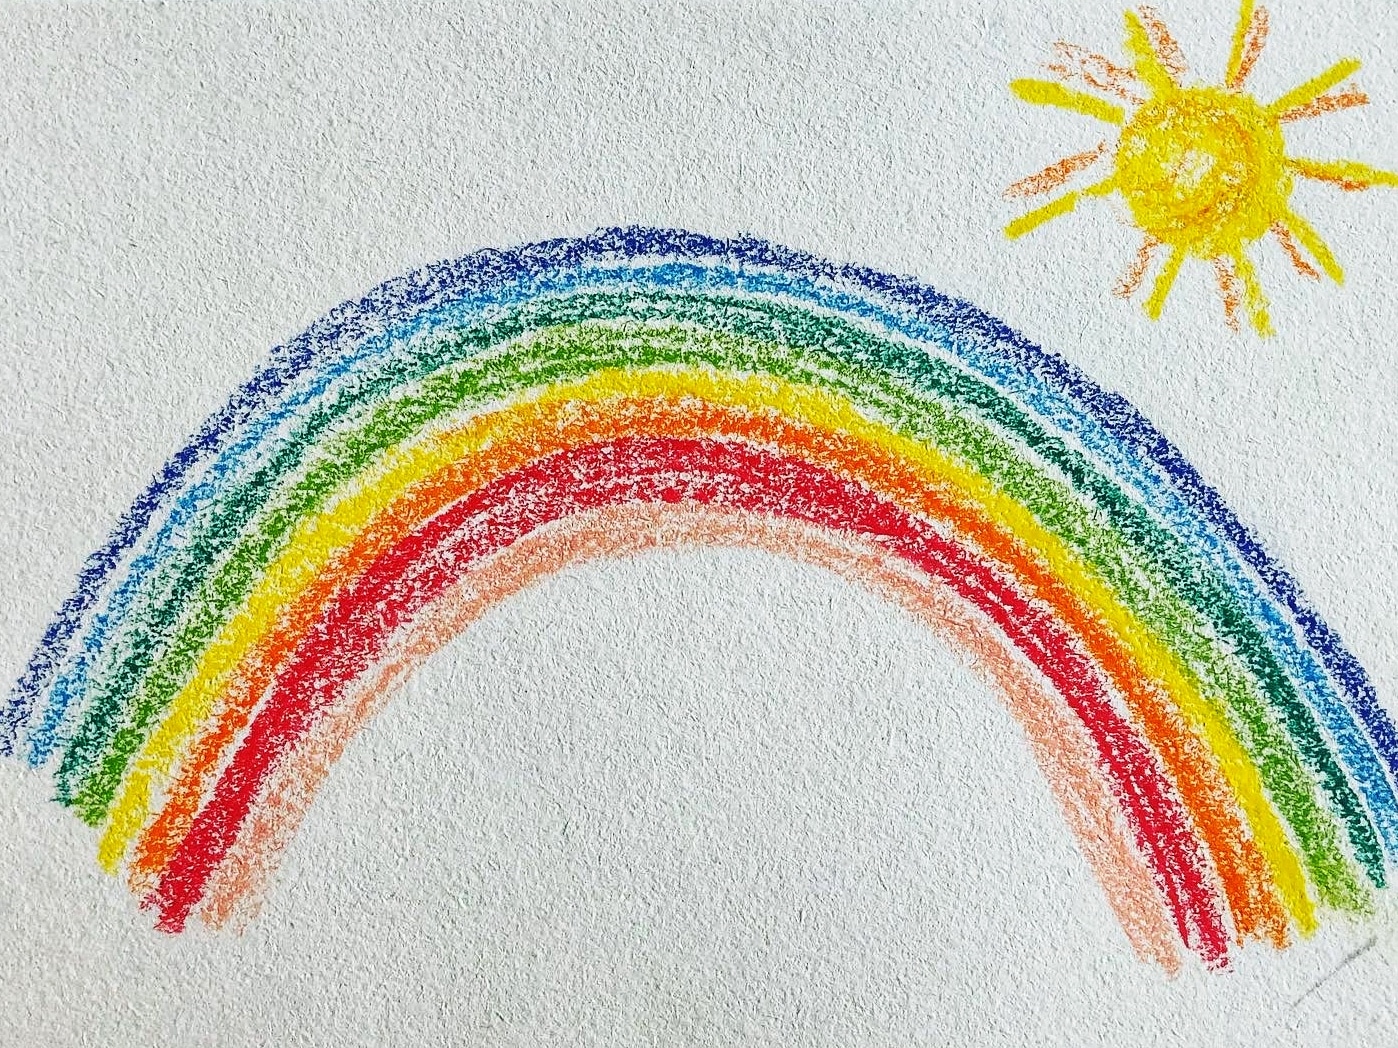 Wat betekent een regenboog_kindertekening_Talking Drawings